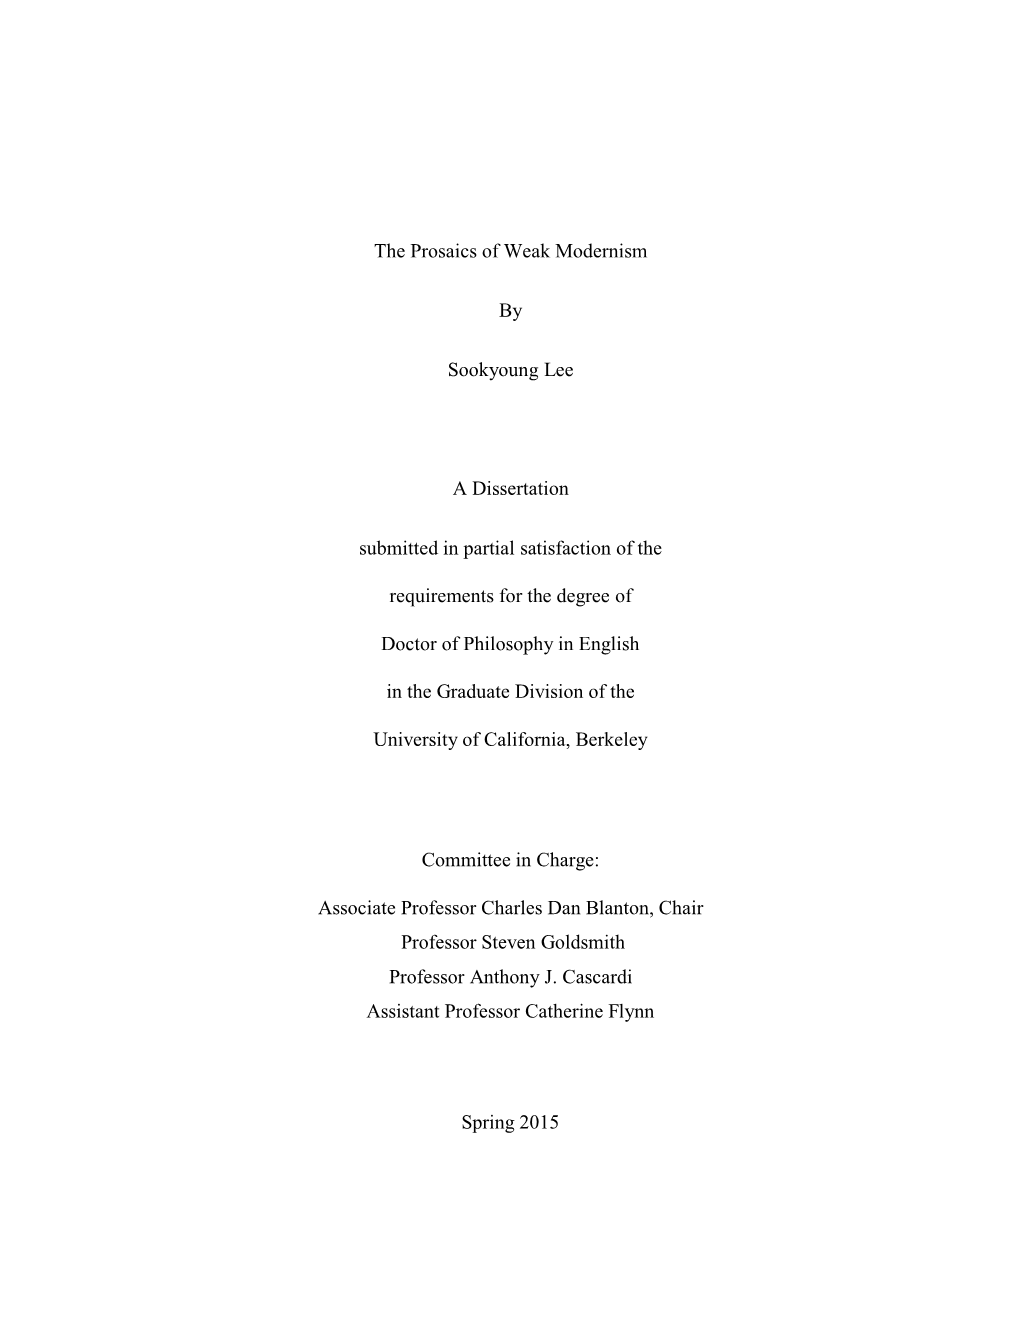 The Prosaics of Weak Modernism by Sookyoung Lee a Dissertation